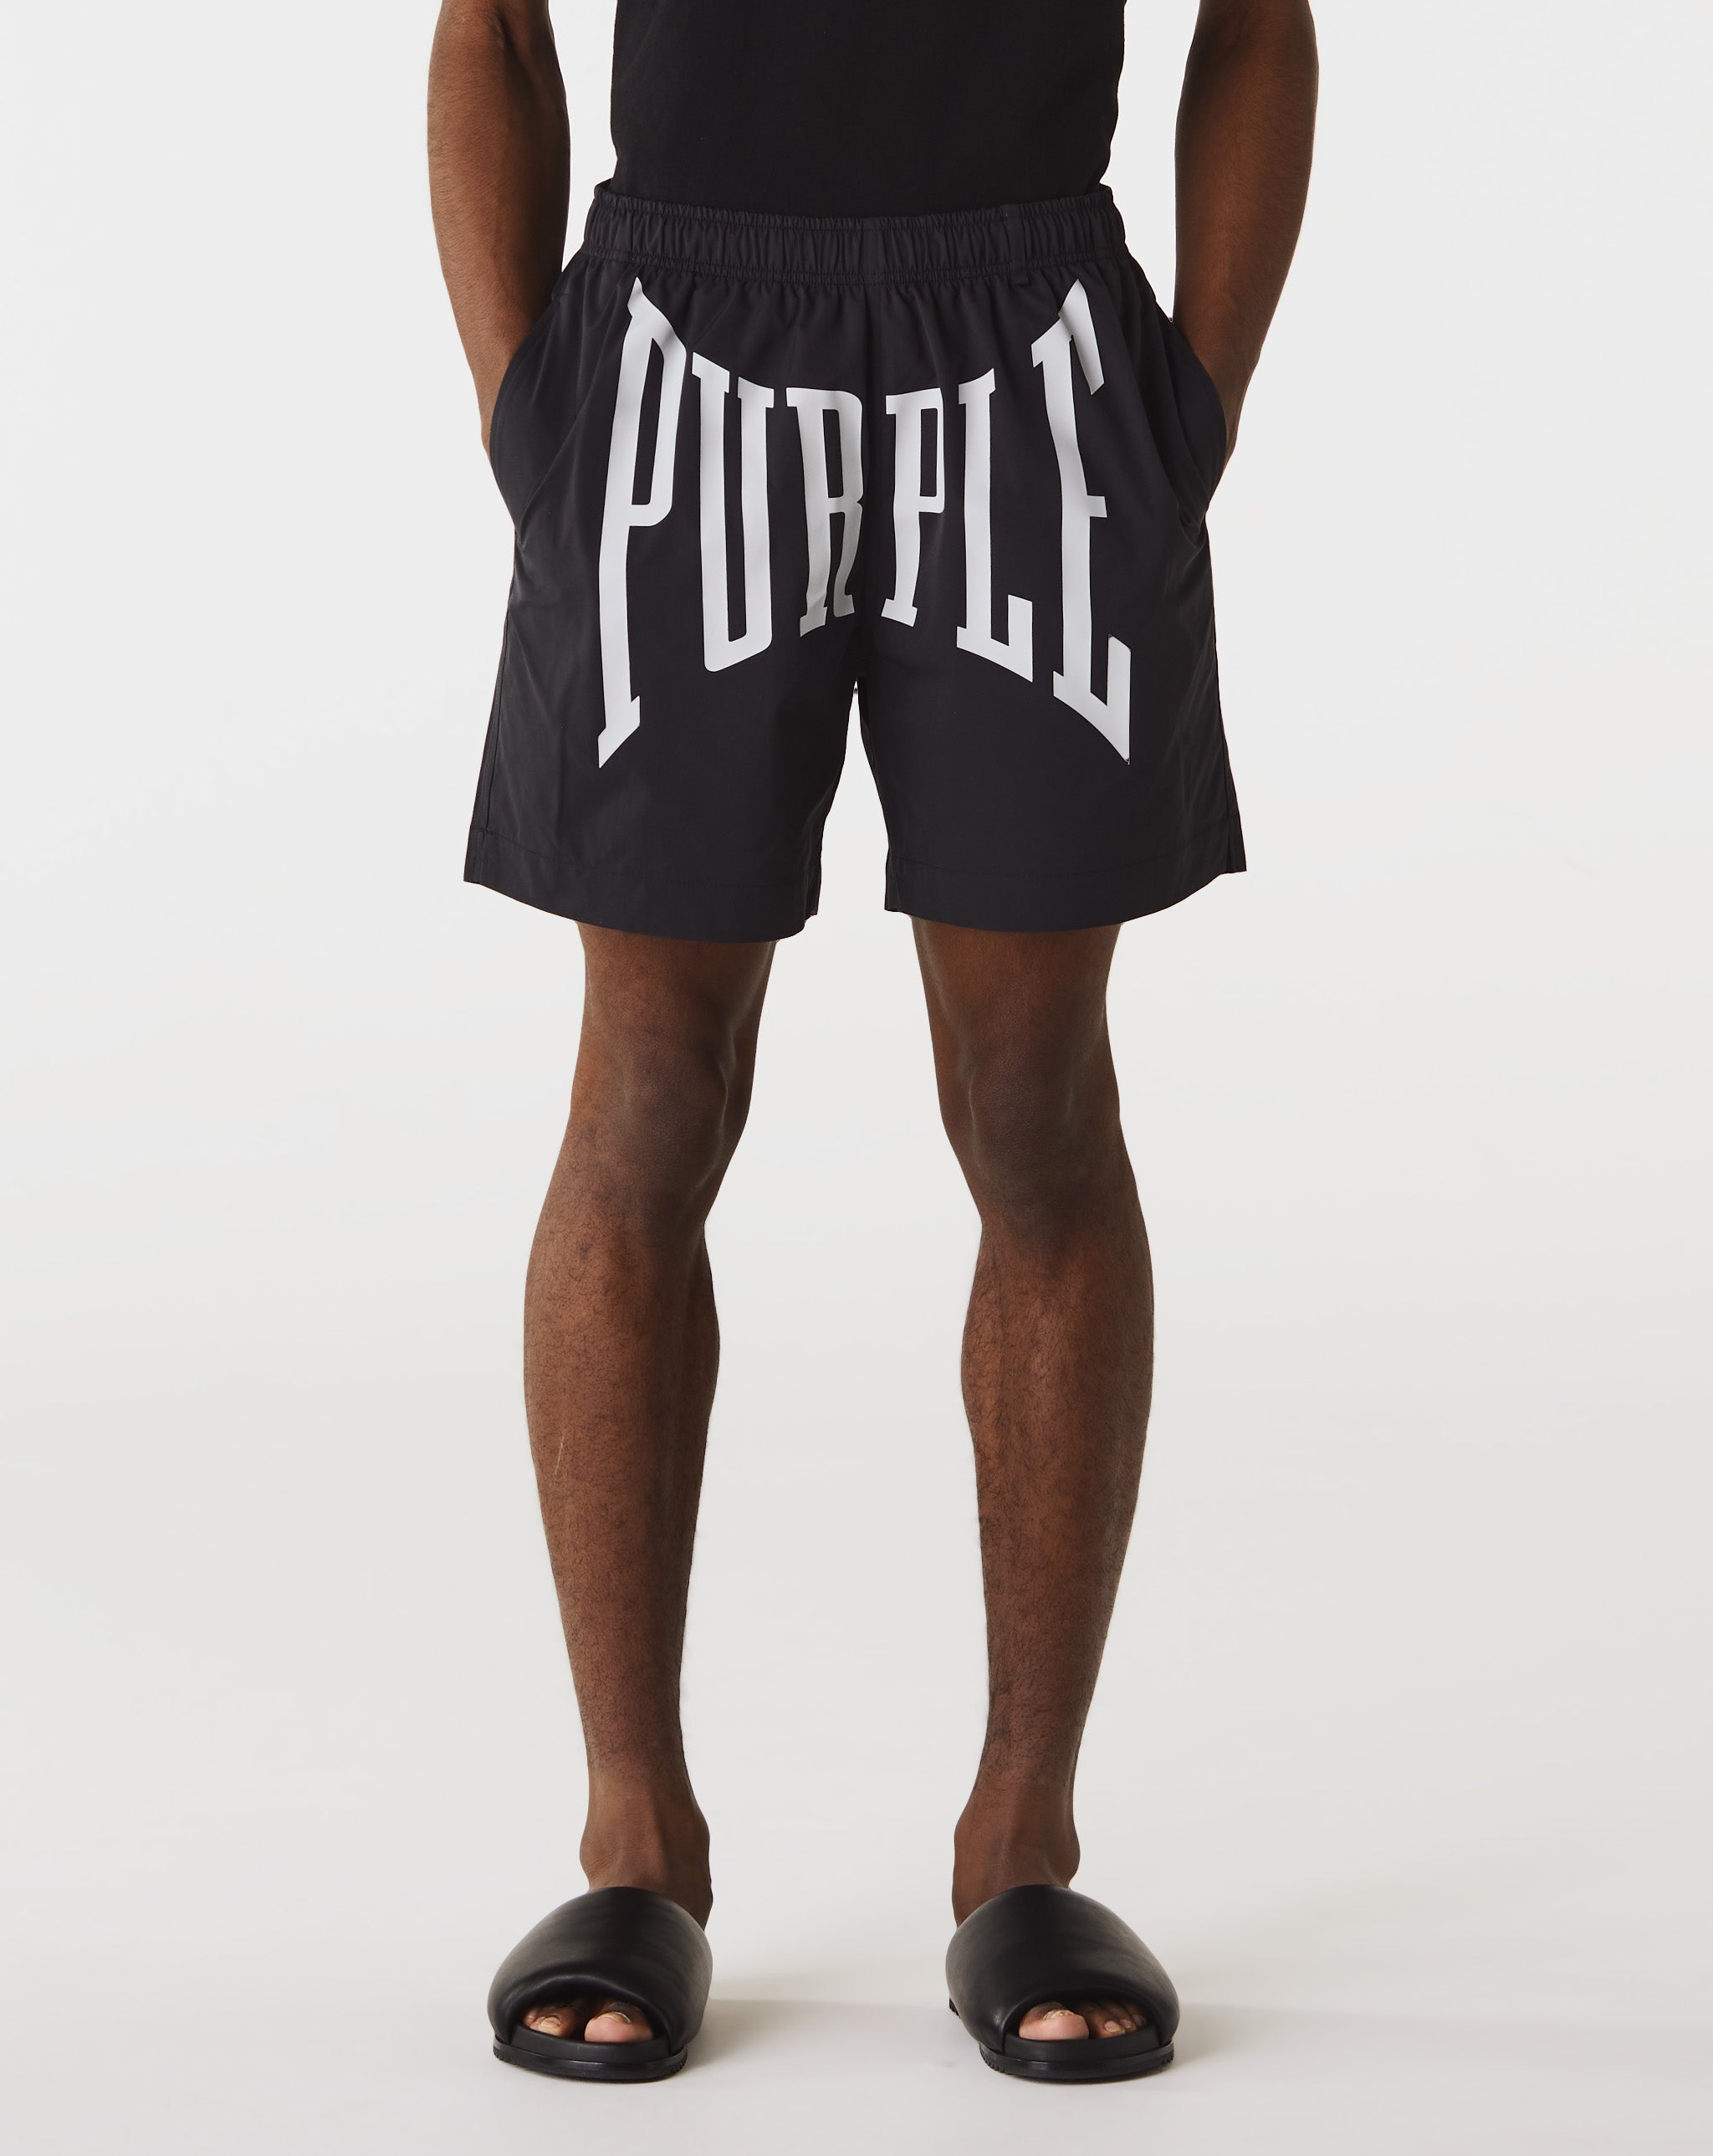 Purple Brand All Round Shorts  - Cheap 127-0 Jordan outlet